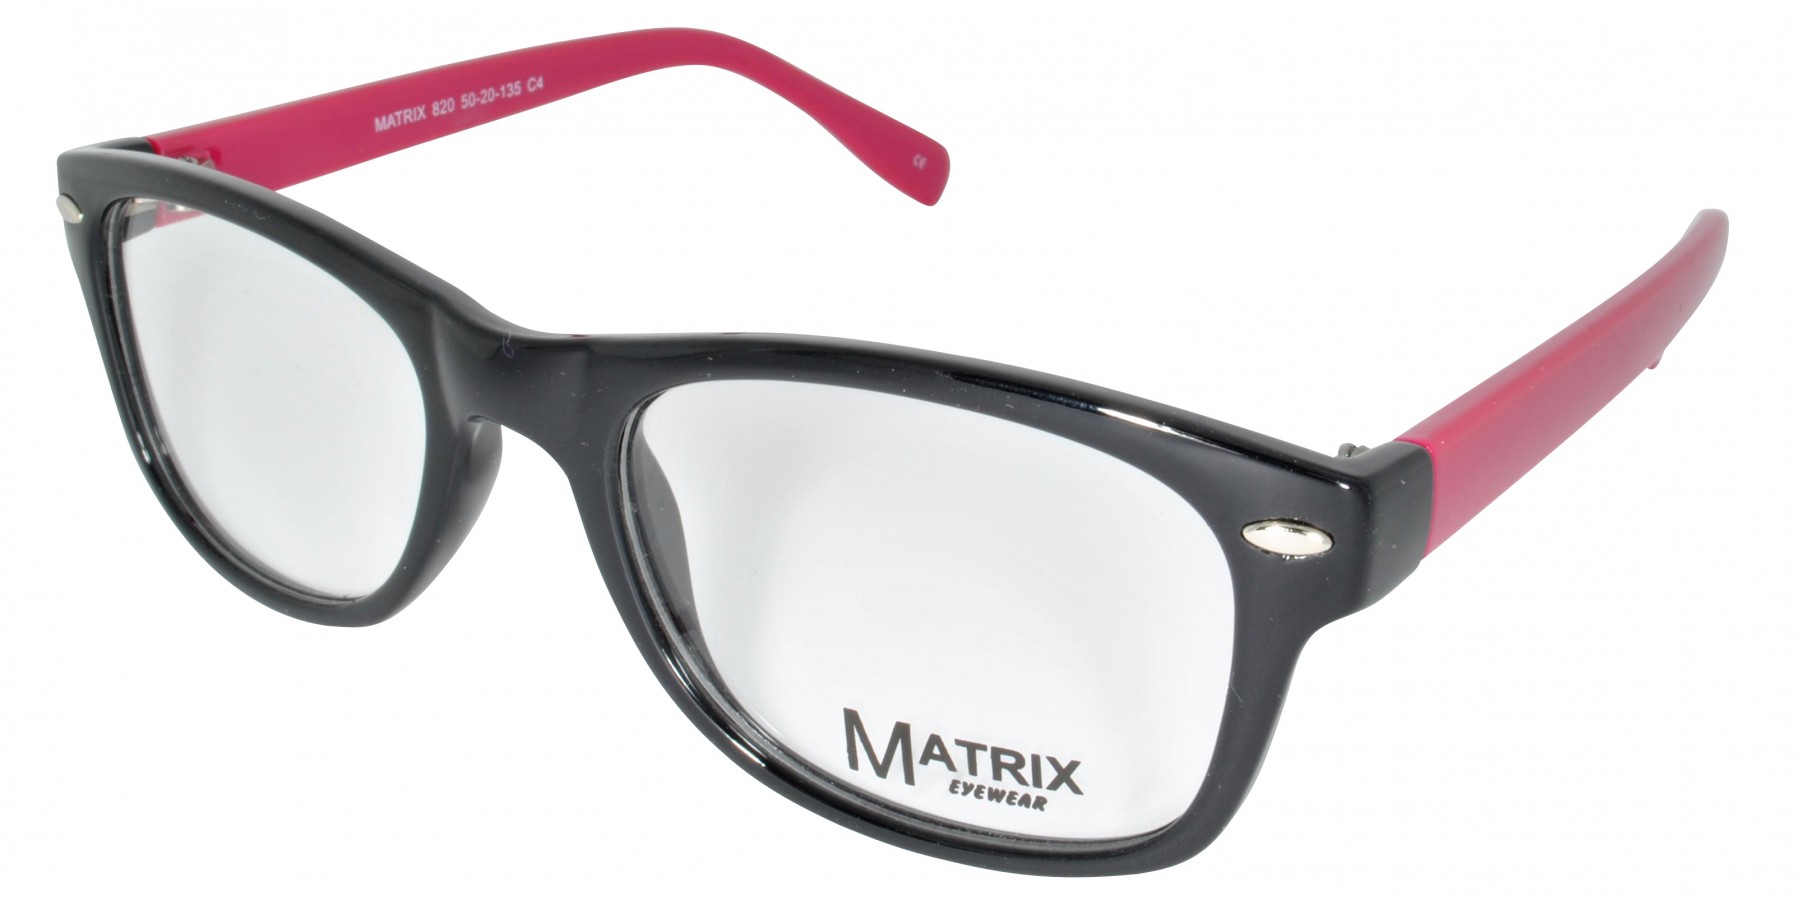 Matrix 820 Prescription Glasses